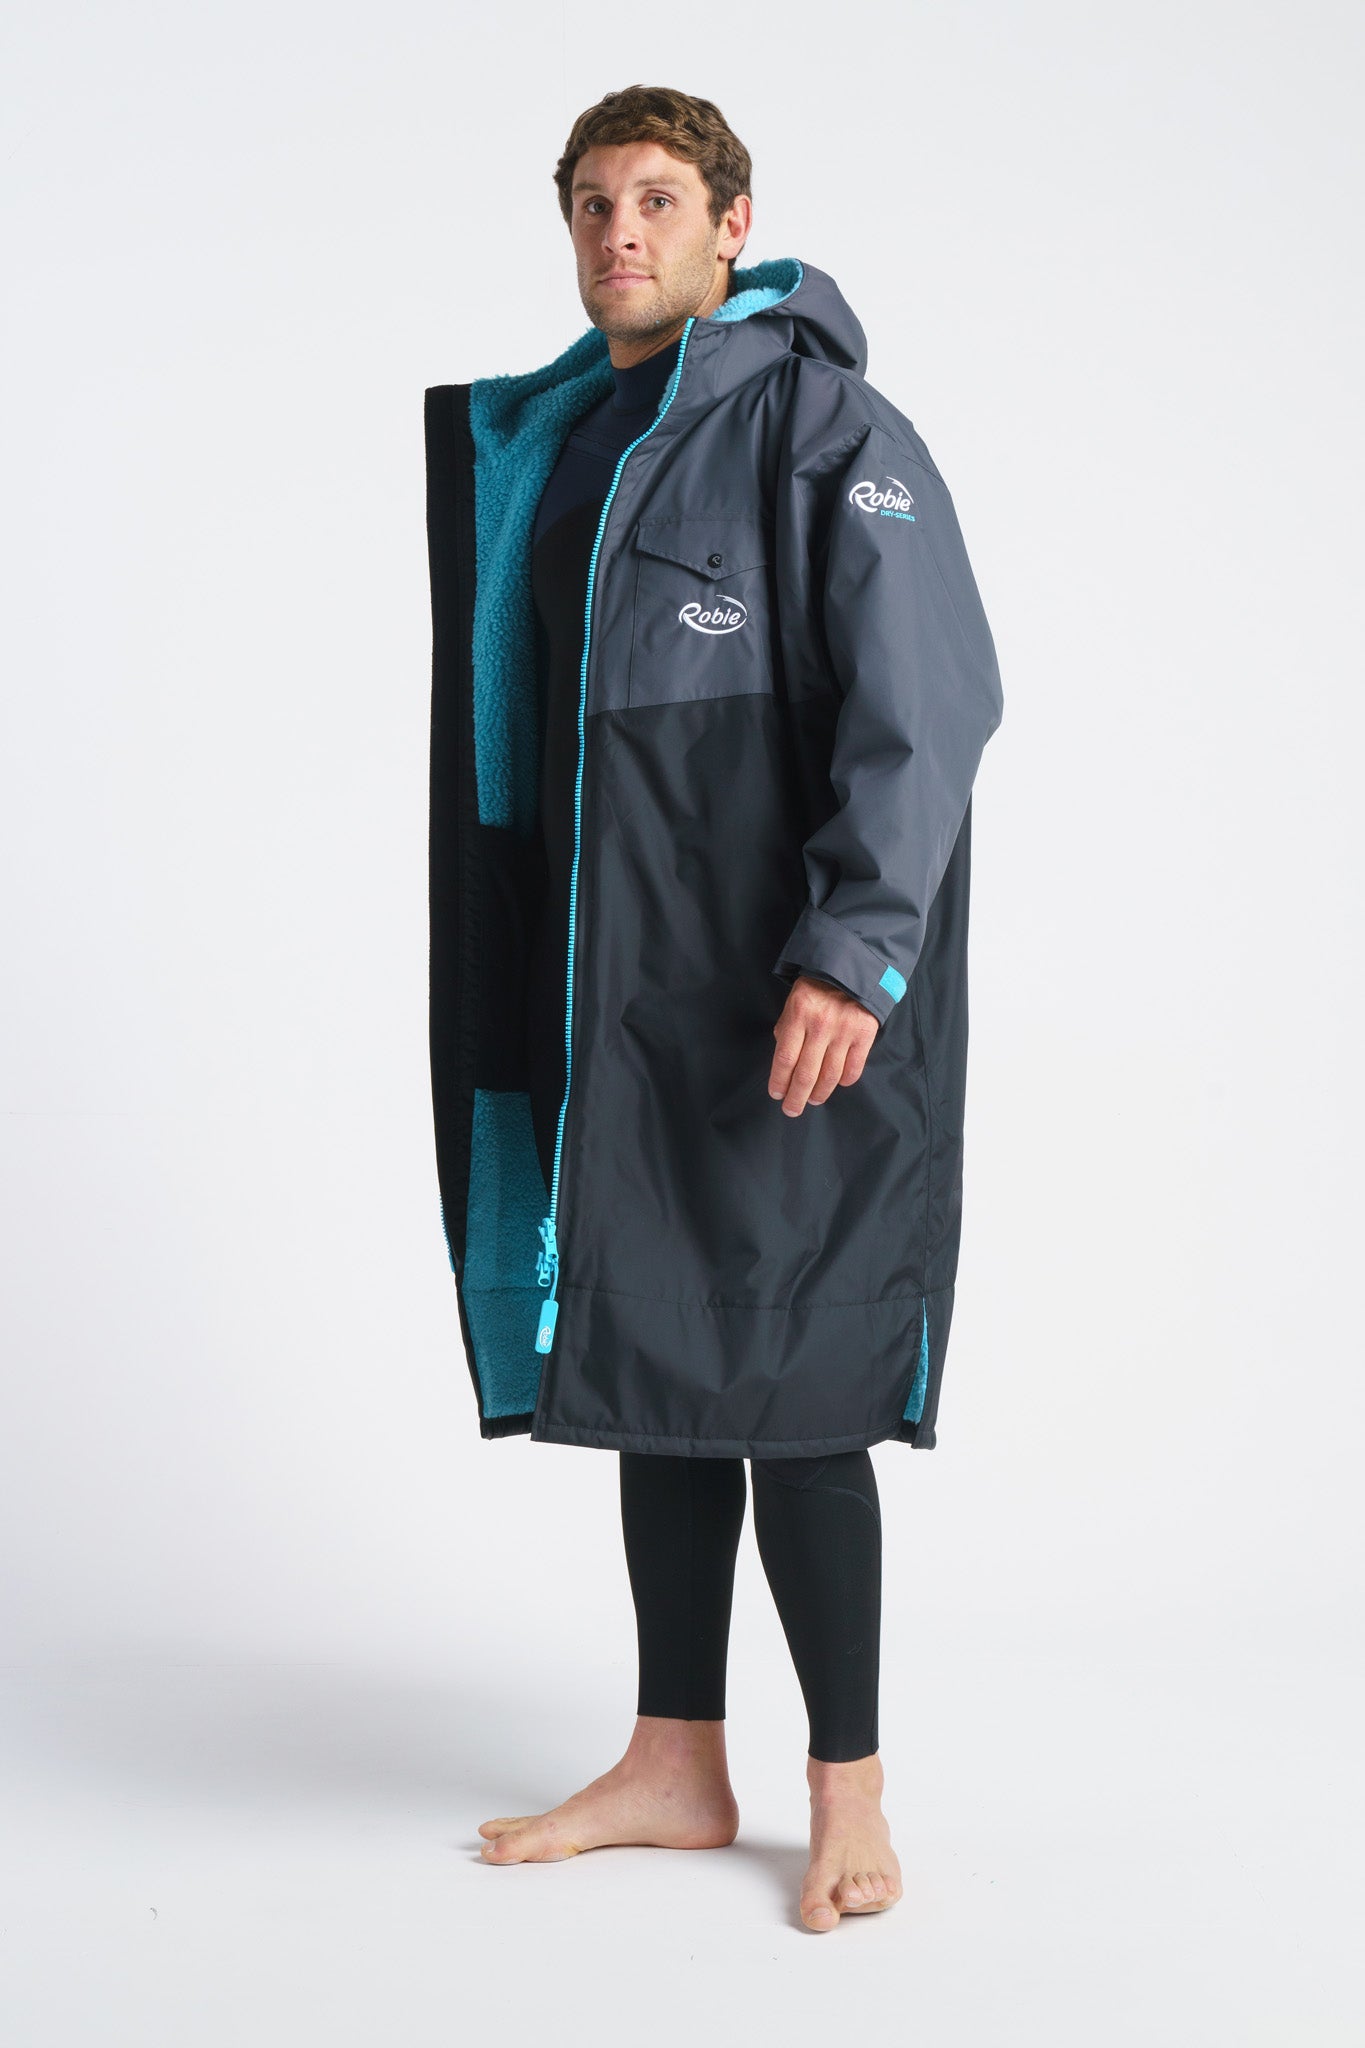 robie-robes-dry-series-changing-robe-waterproof-preorder-product-blacksheepsurfco-galway-ireland-charcoal-blue-atoll-medium